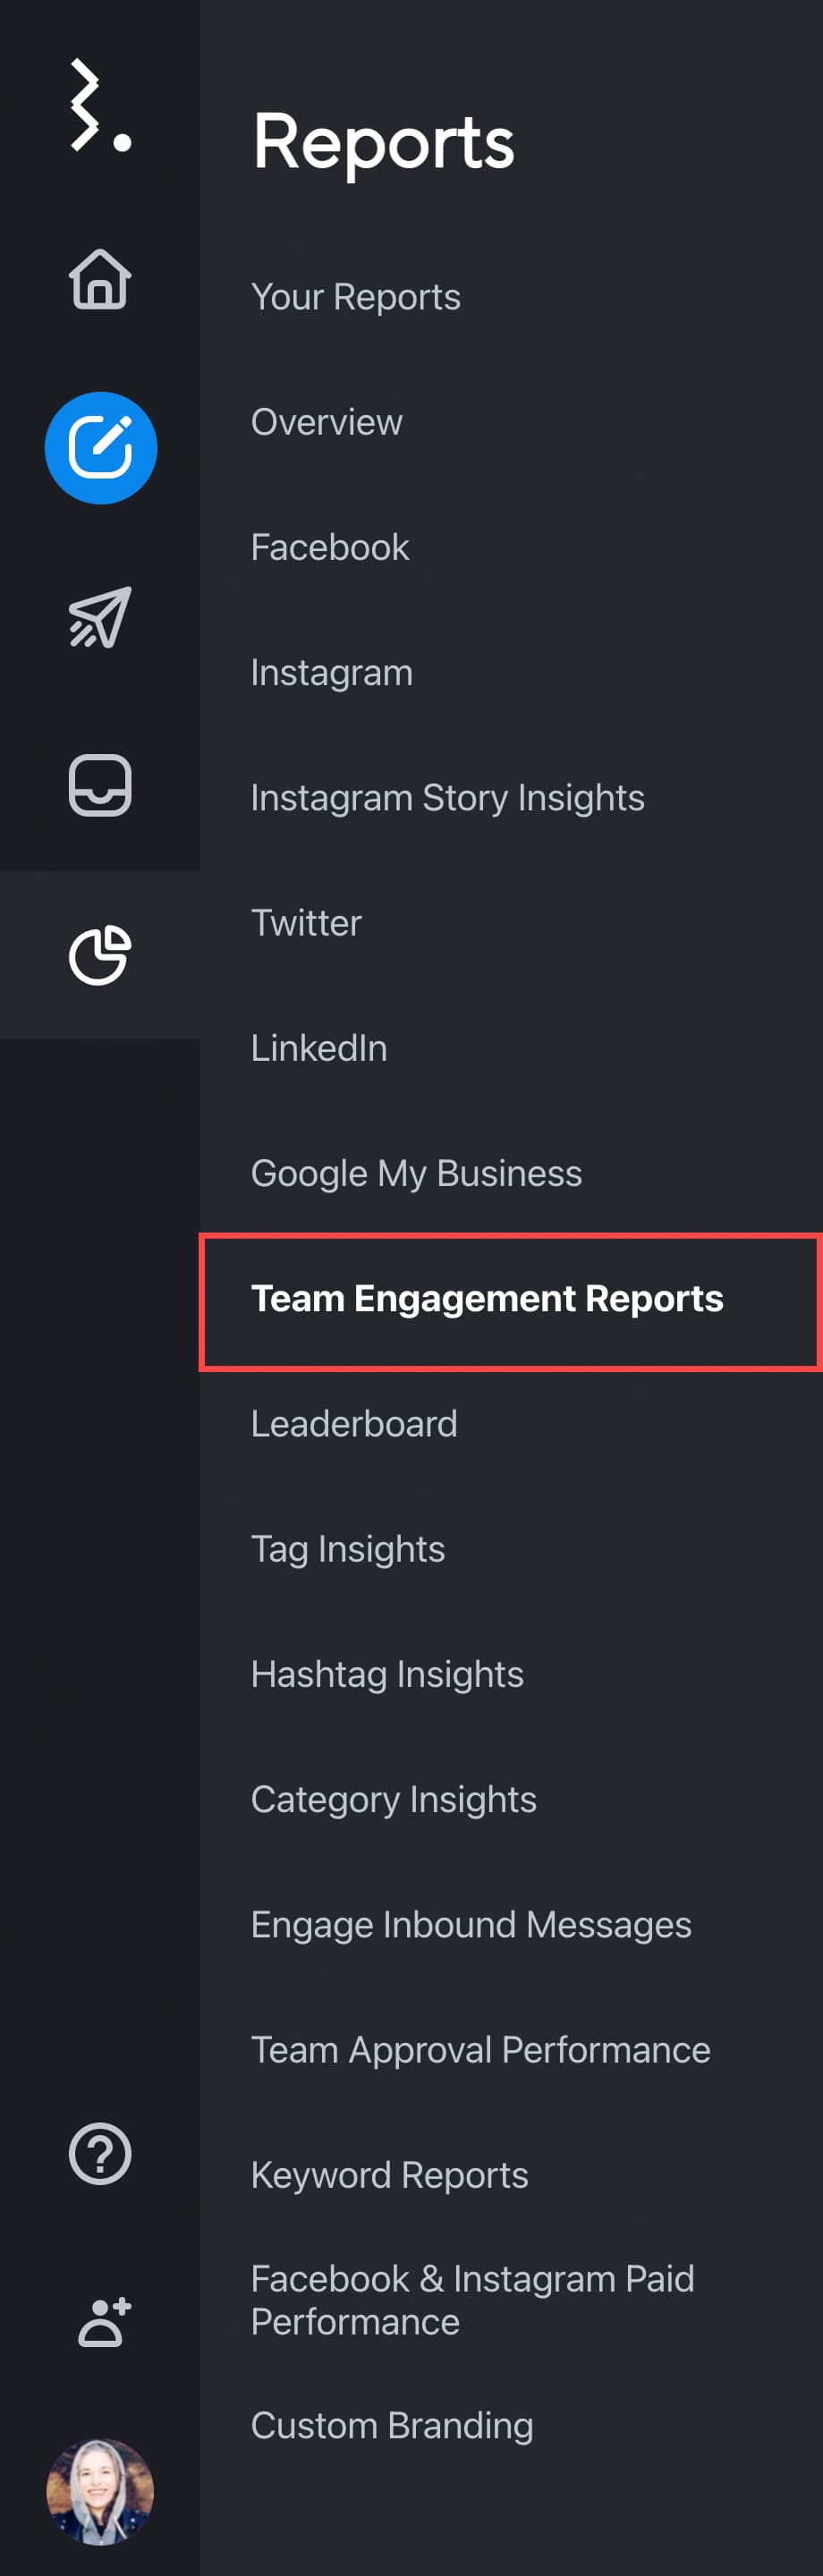 team_engagement_reports.jpg